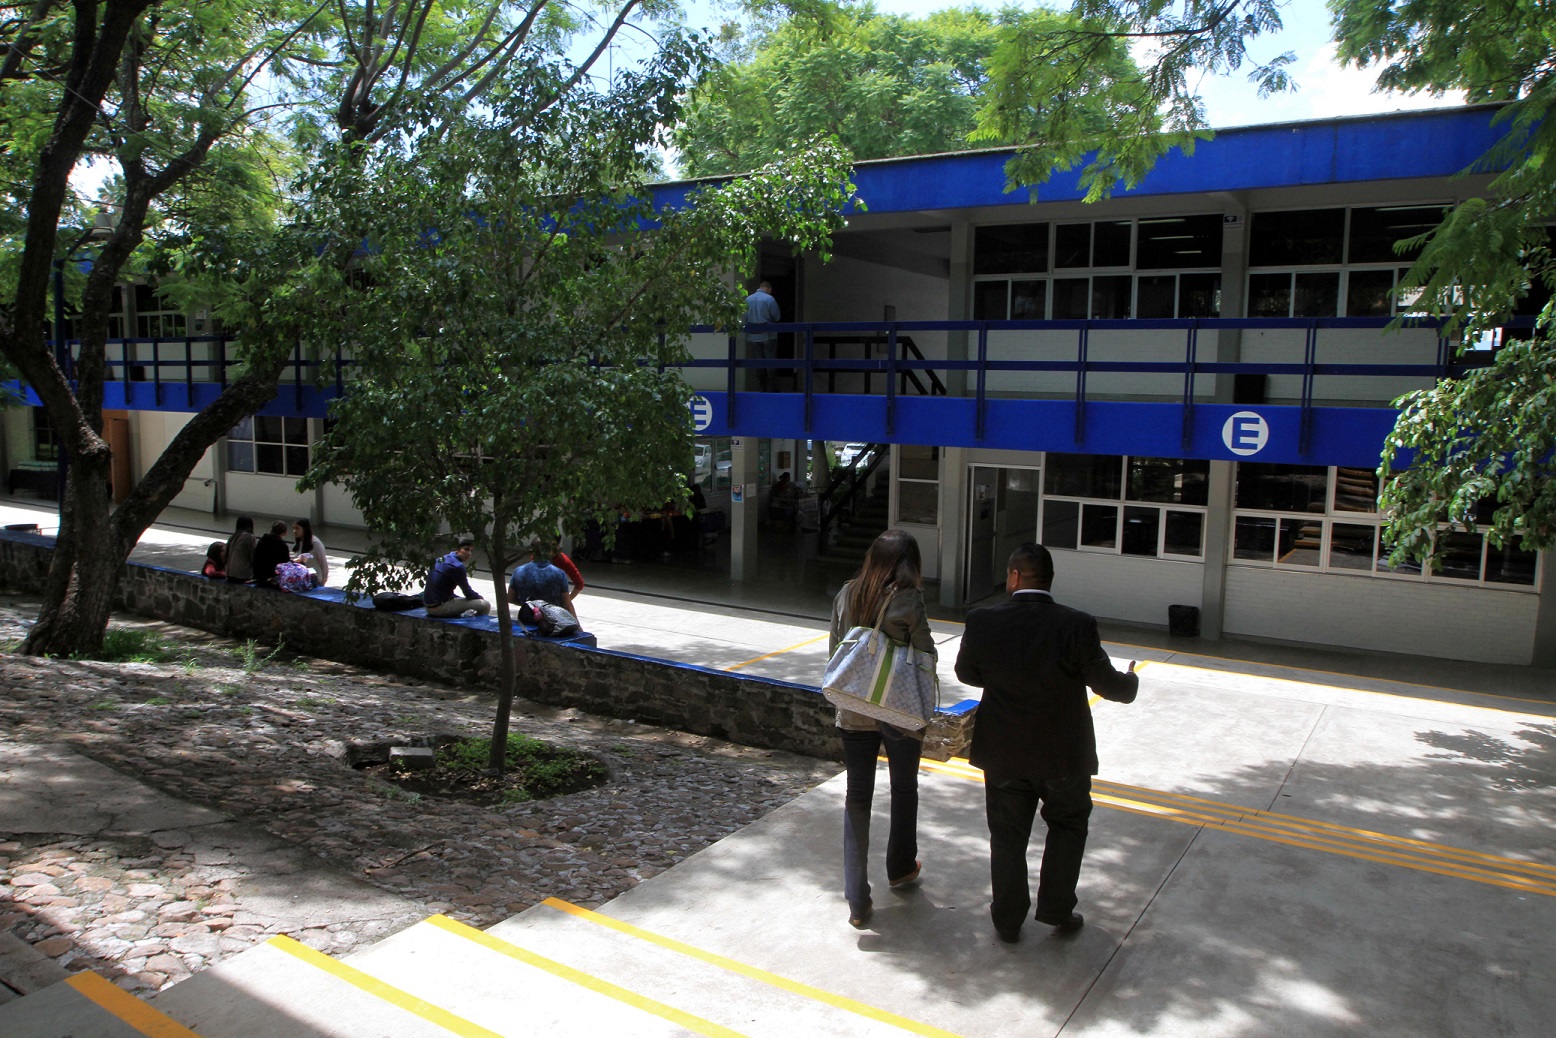 UAQ, Botón de Pánico, Seguridad, Herramienta, Corregidora, Celular, Campus Juriquilla, Centro Universitario, GPS